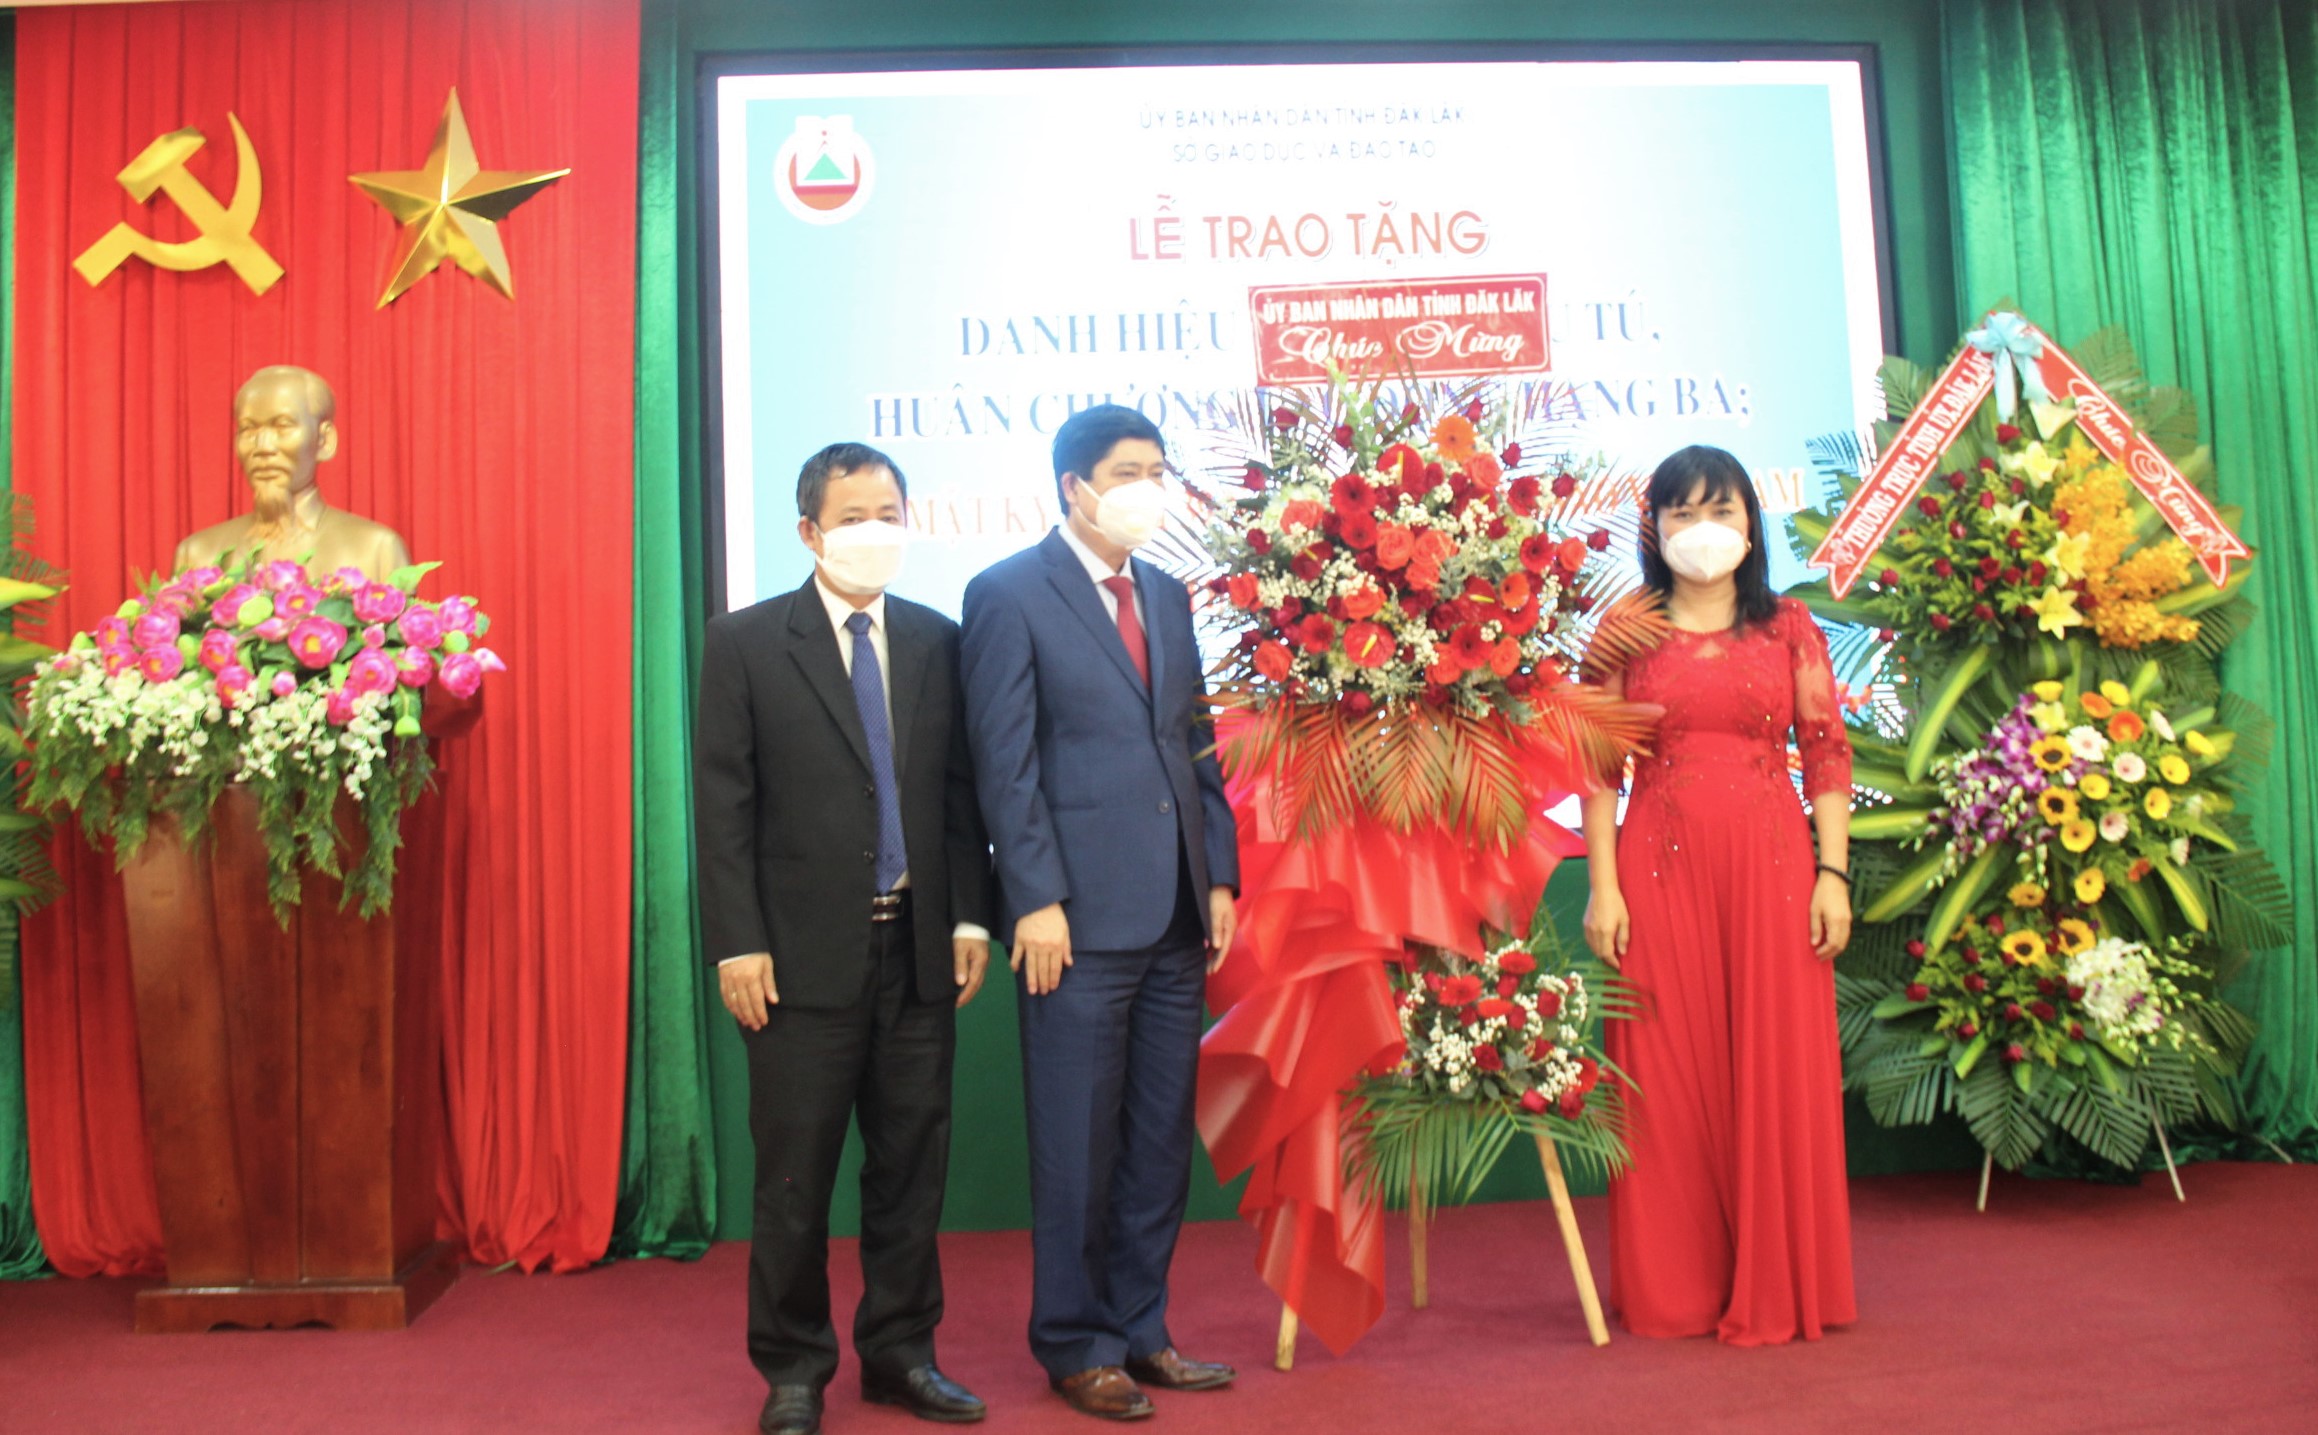 A ceremony to celebrate the 39th anniversary of Vietnamese Teachers' Day (November 20th 1982 - November 20th 2021)